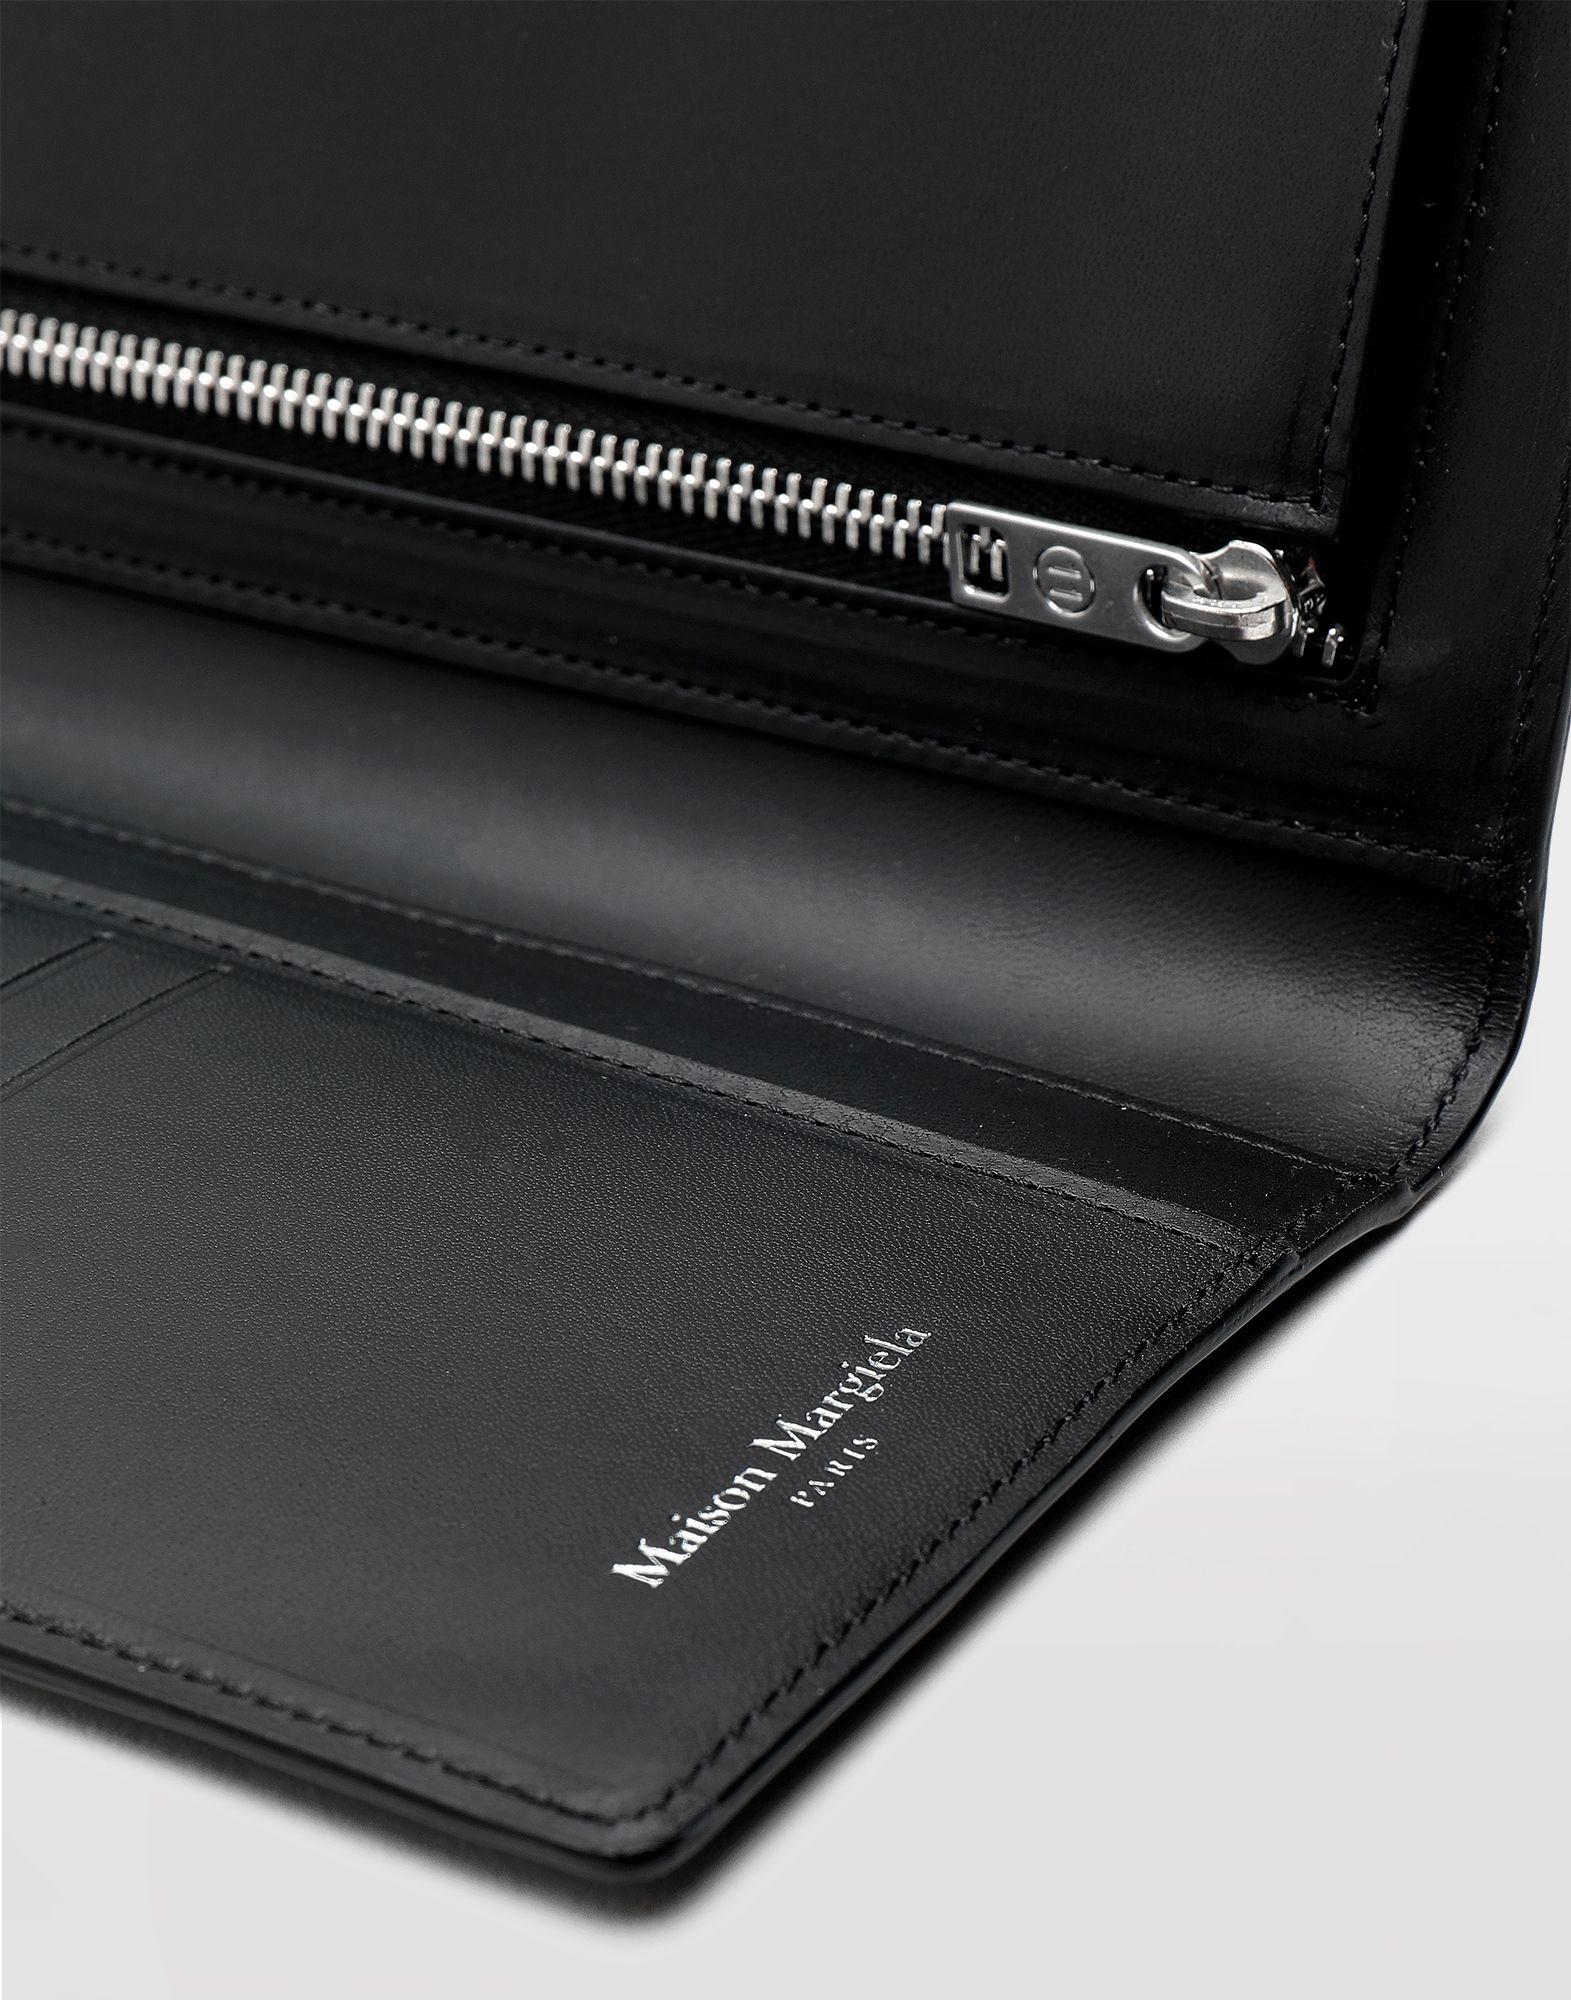 Maison Margiela Folded Calfskin Wallet in Black for Men - Lyst